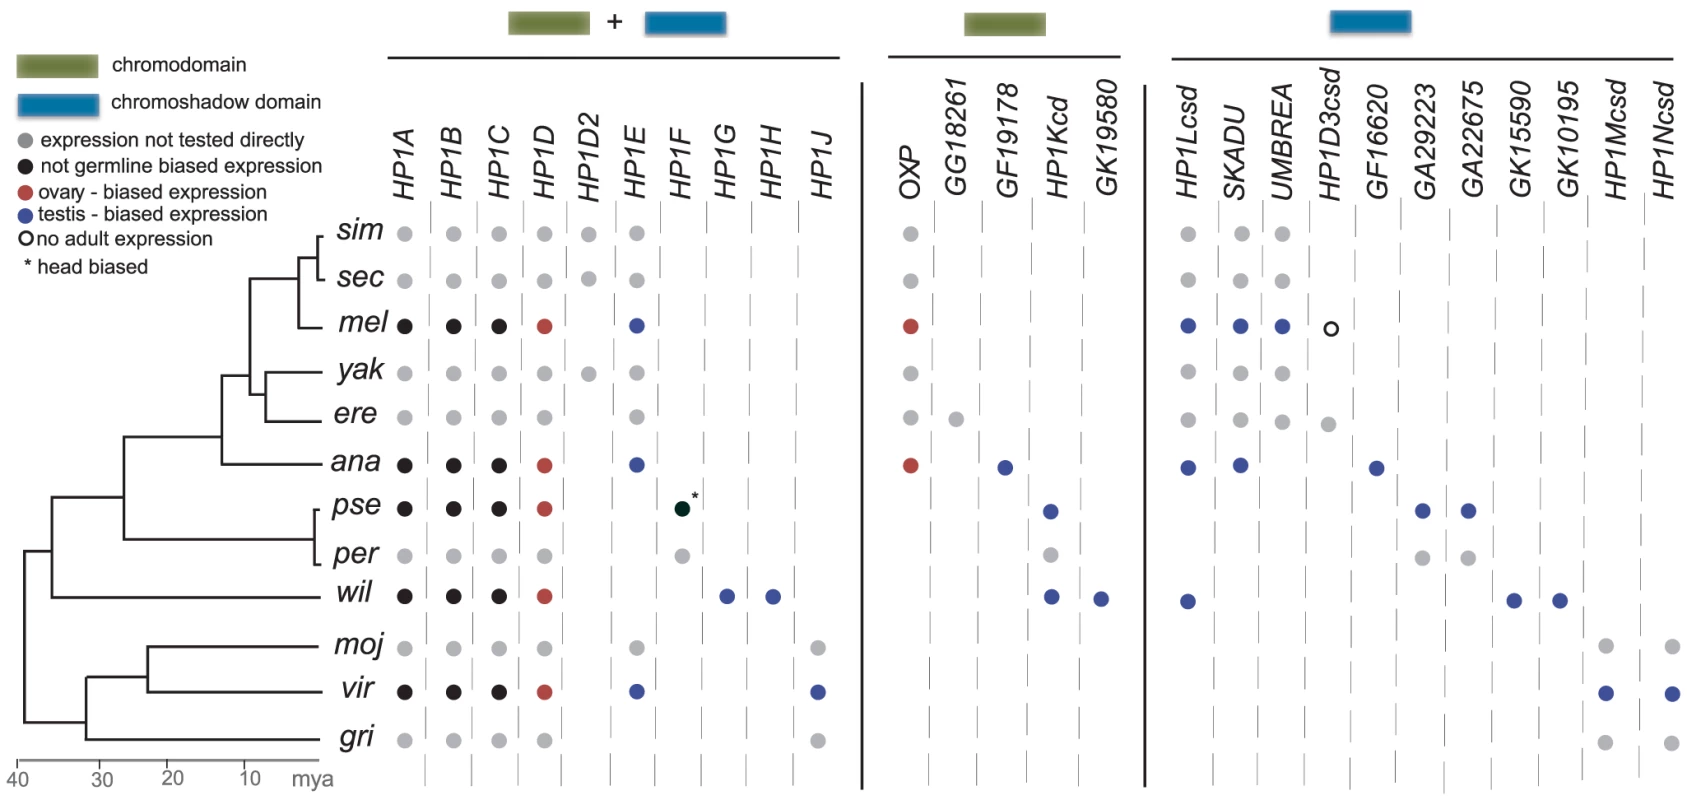 HP1 gene compendia in the 12 Drosophila species.